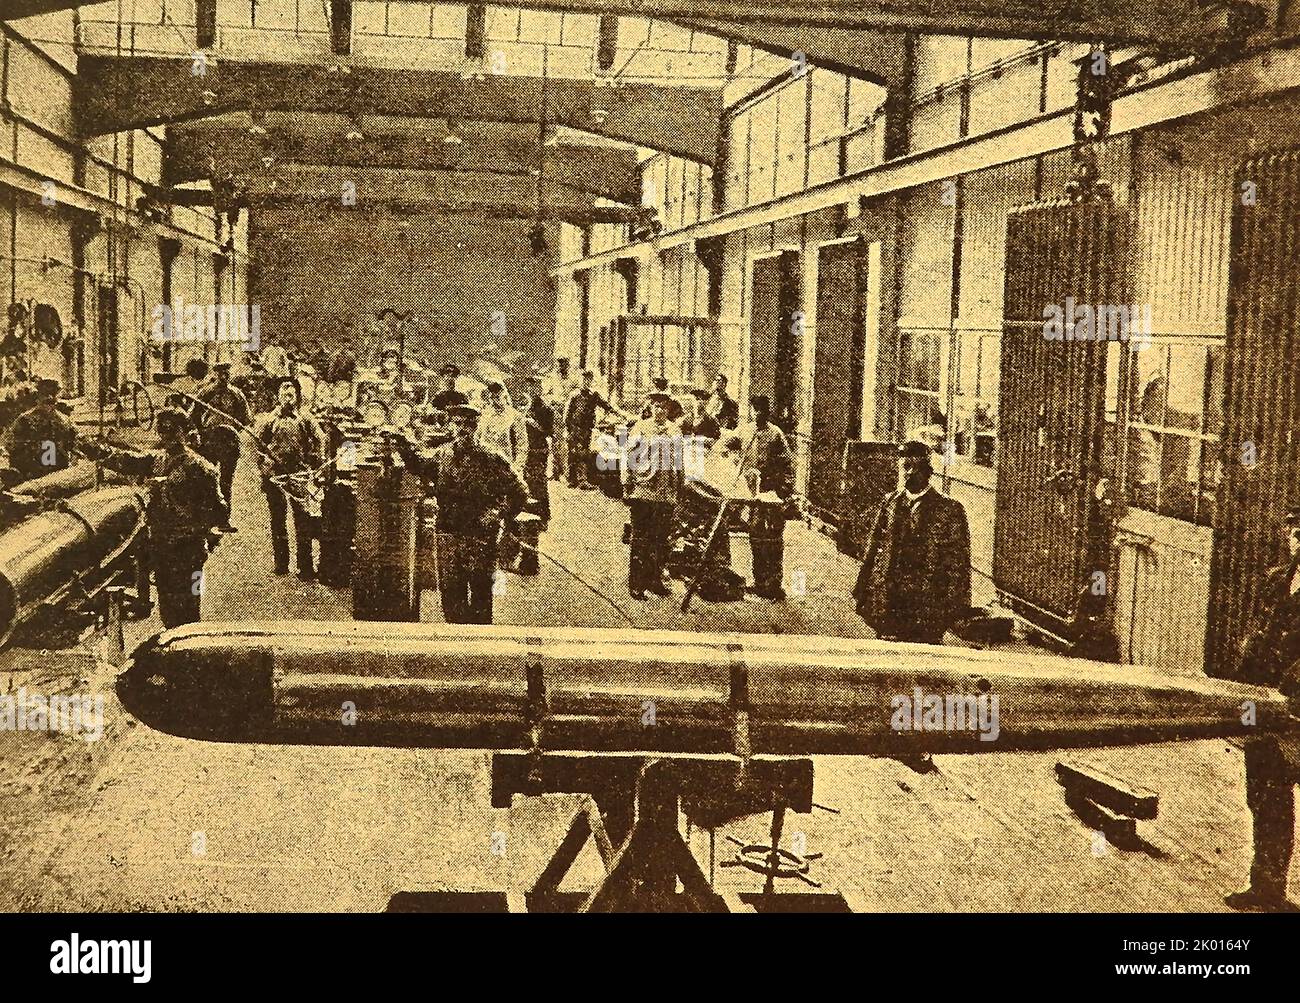 Les travailleurs de munitions WWI - à l'intérieur d'une usine allemande de torpilles. ------------ Munitionsarbeiter Ersten Weltkrieg - in einer deutschen Torpedofabrik. Banque D'Images